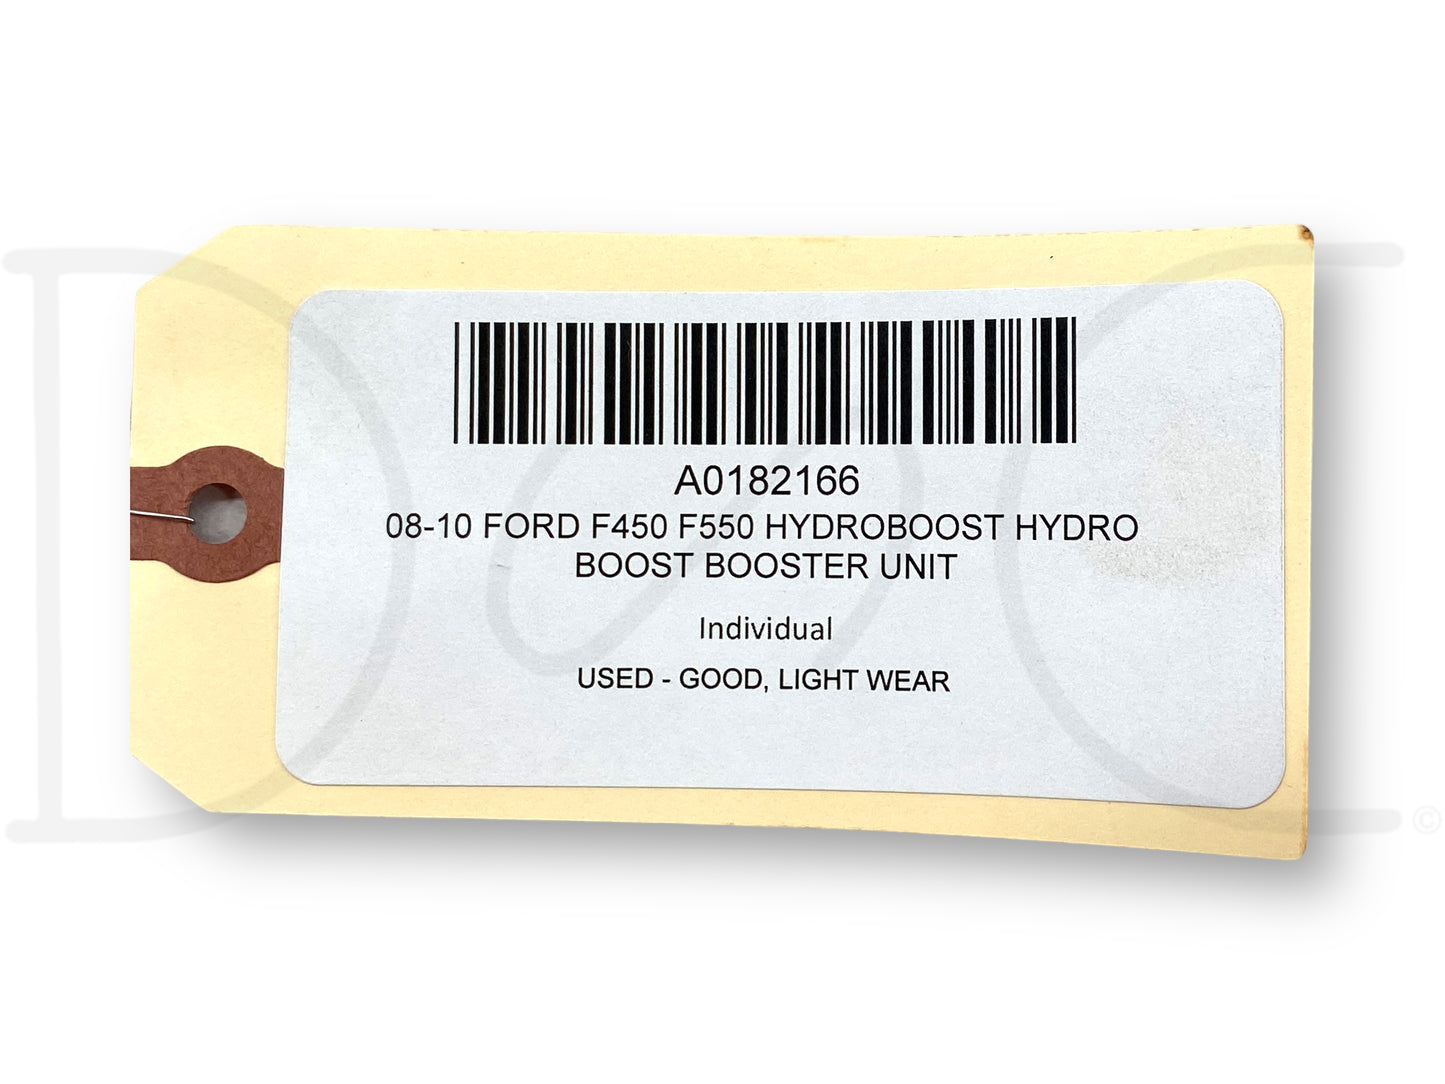 08-10 Ford F450 F550 Hydroboost Hydro Boost Booster Unit